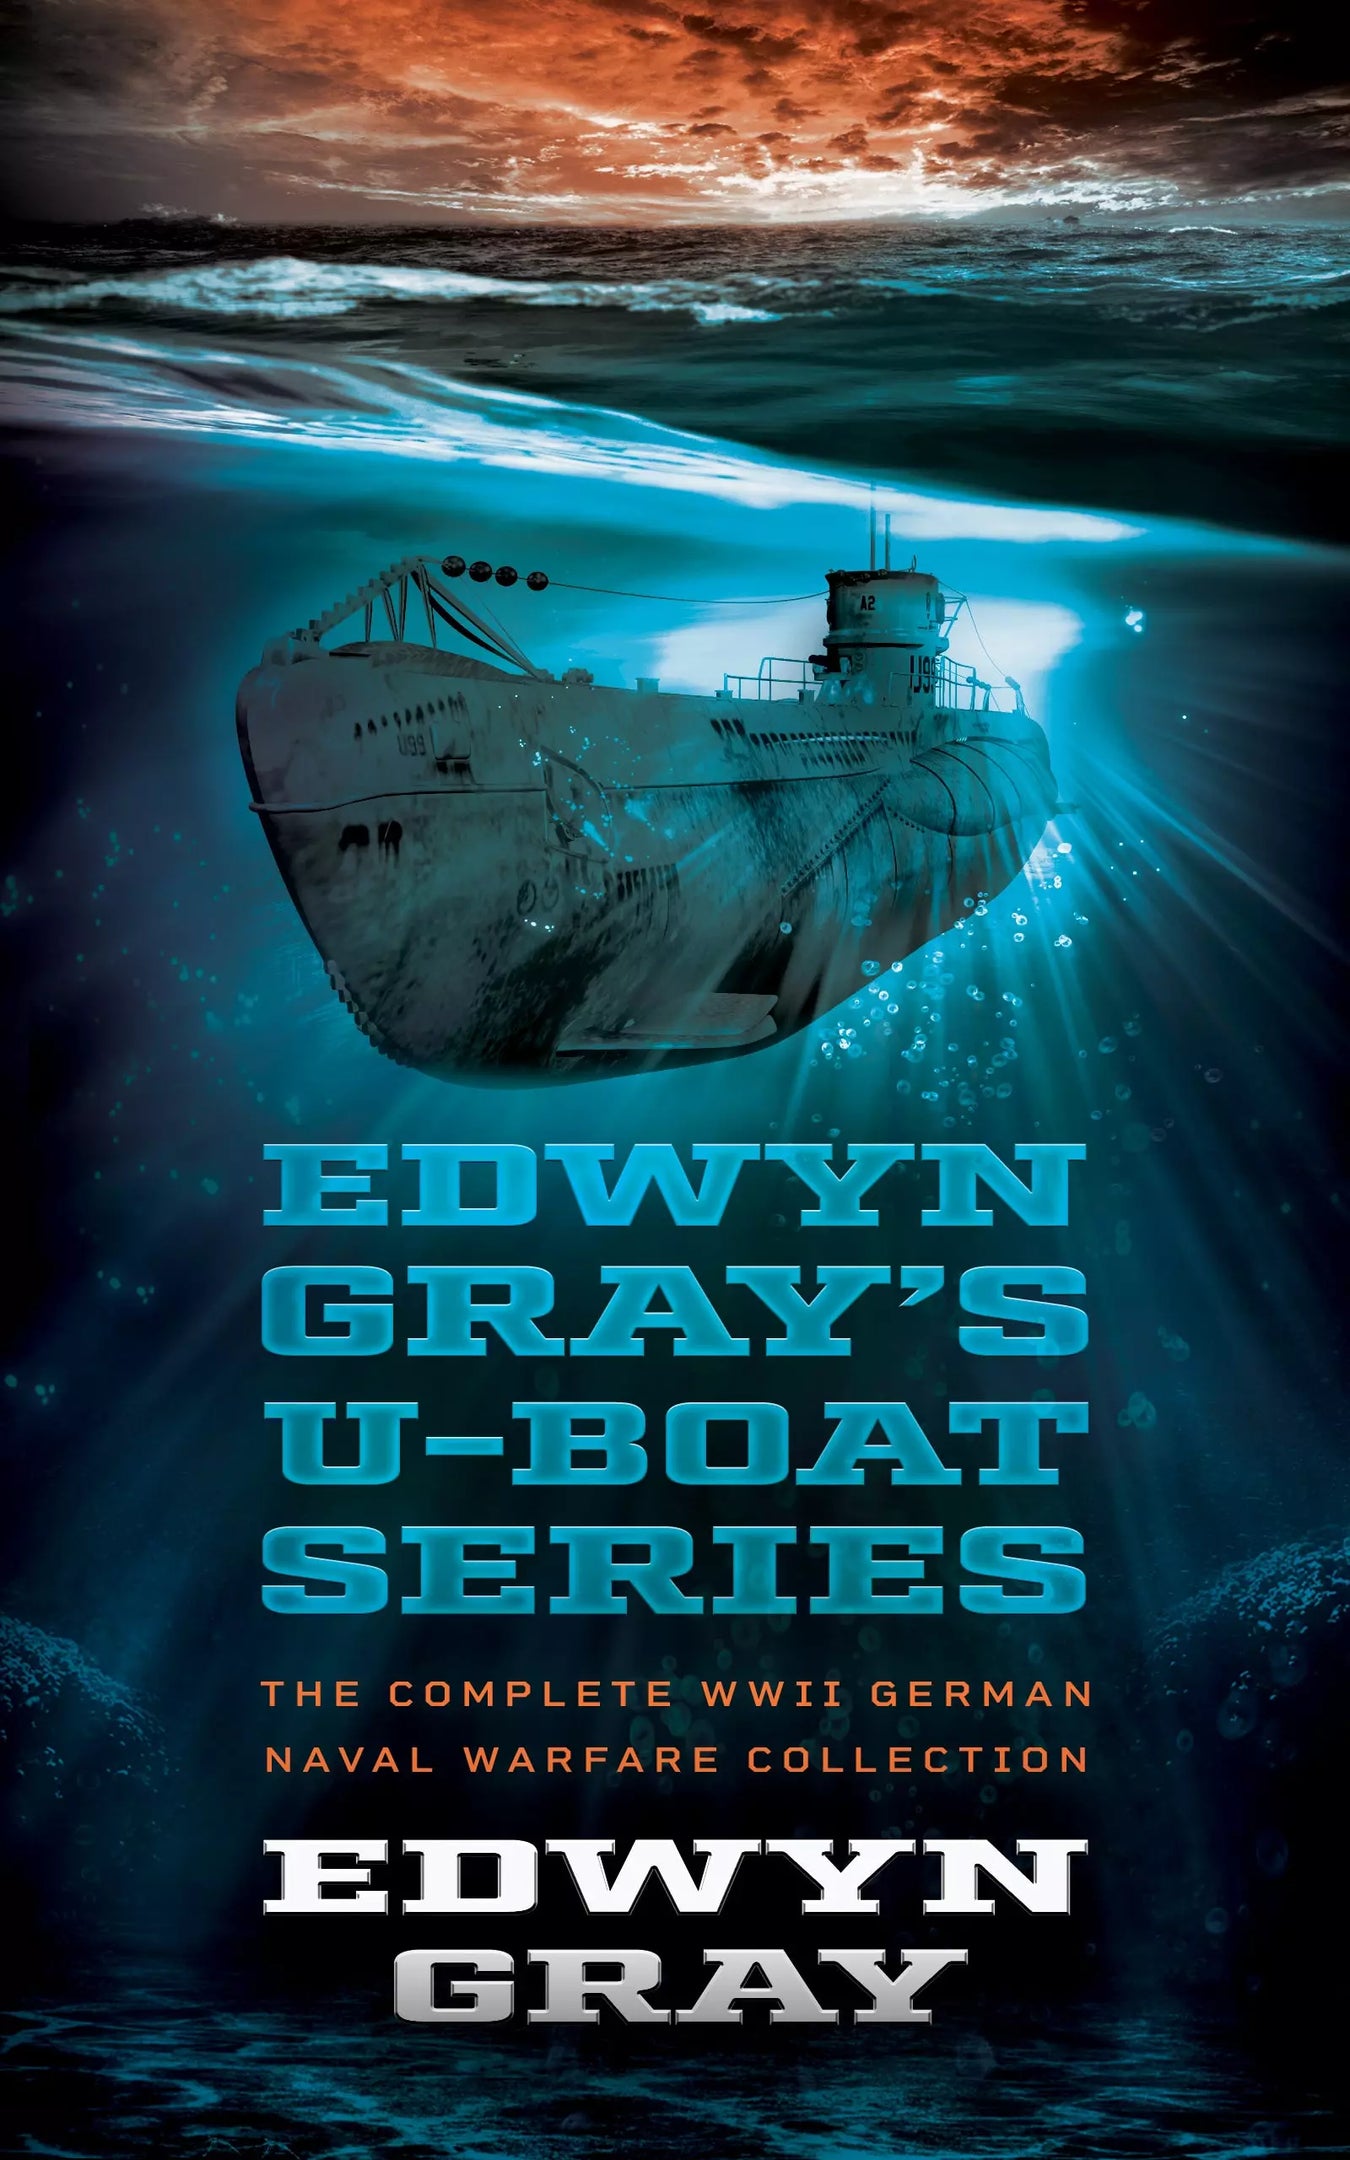 The U-Boat